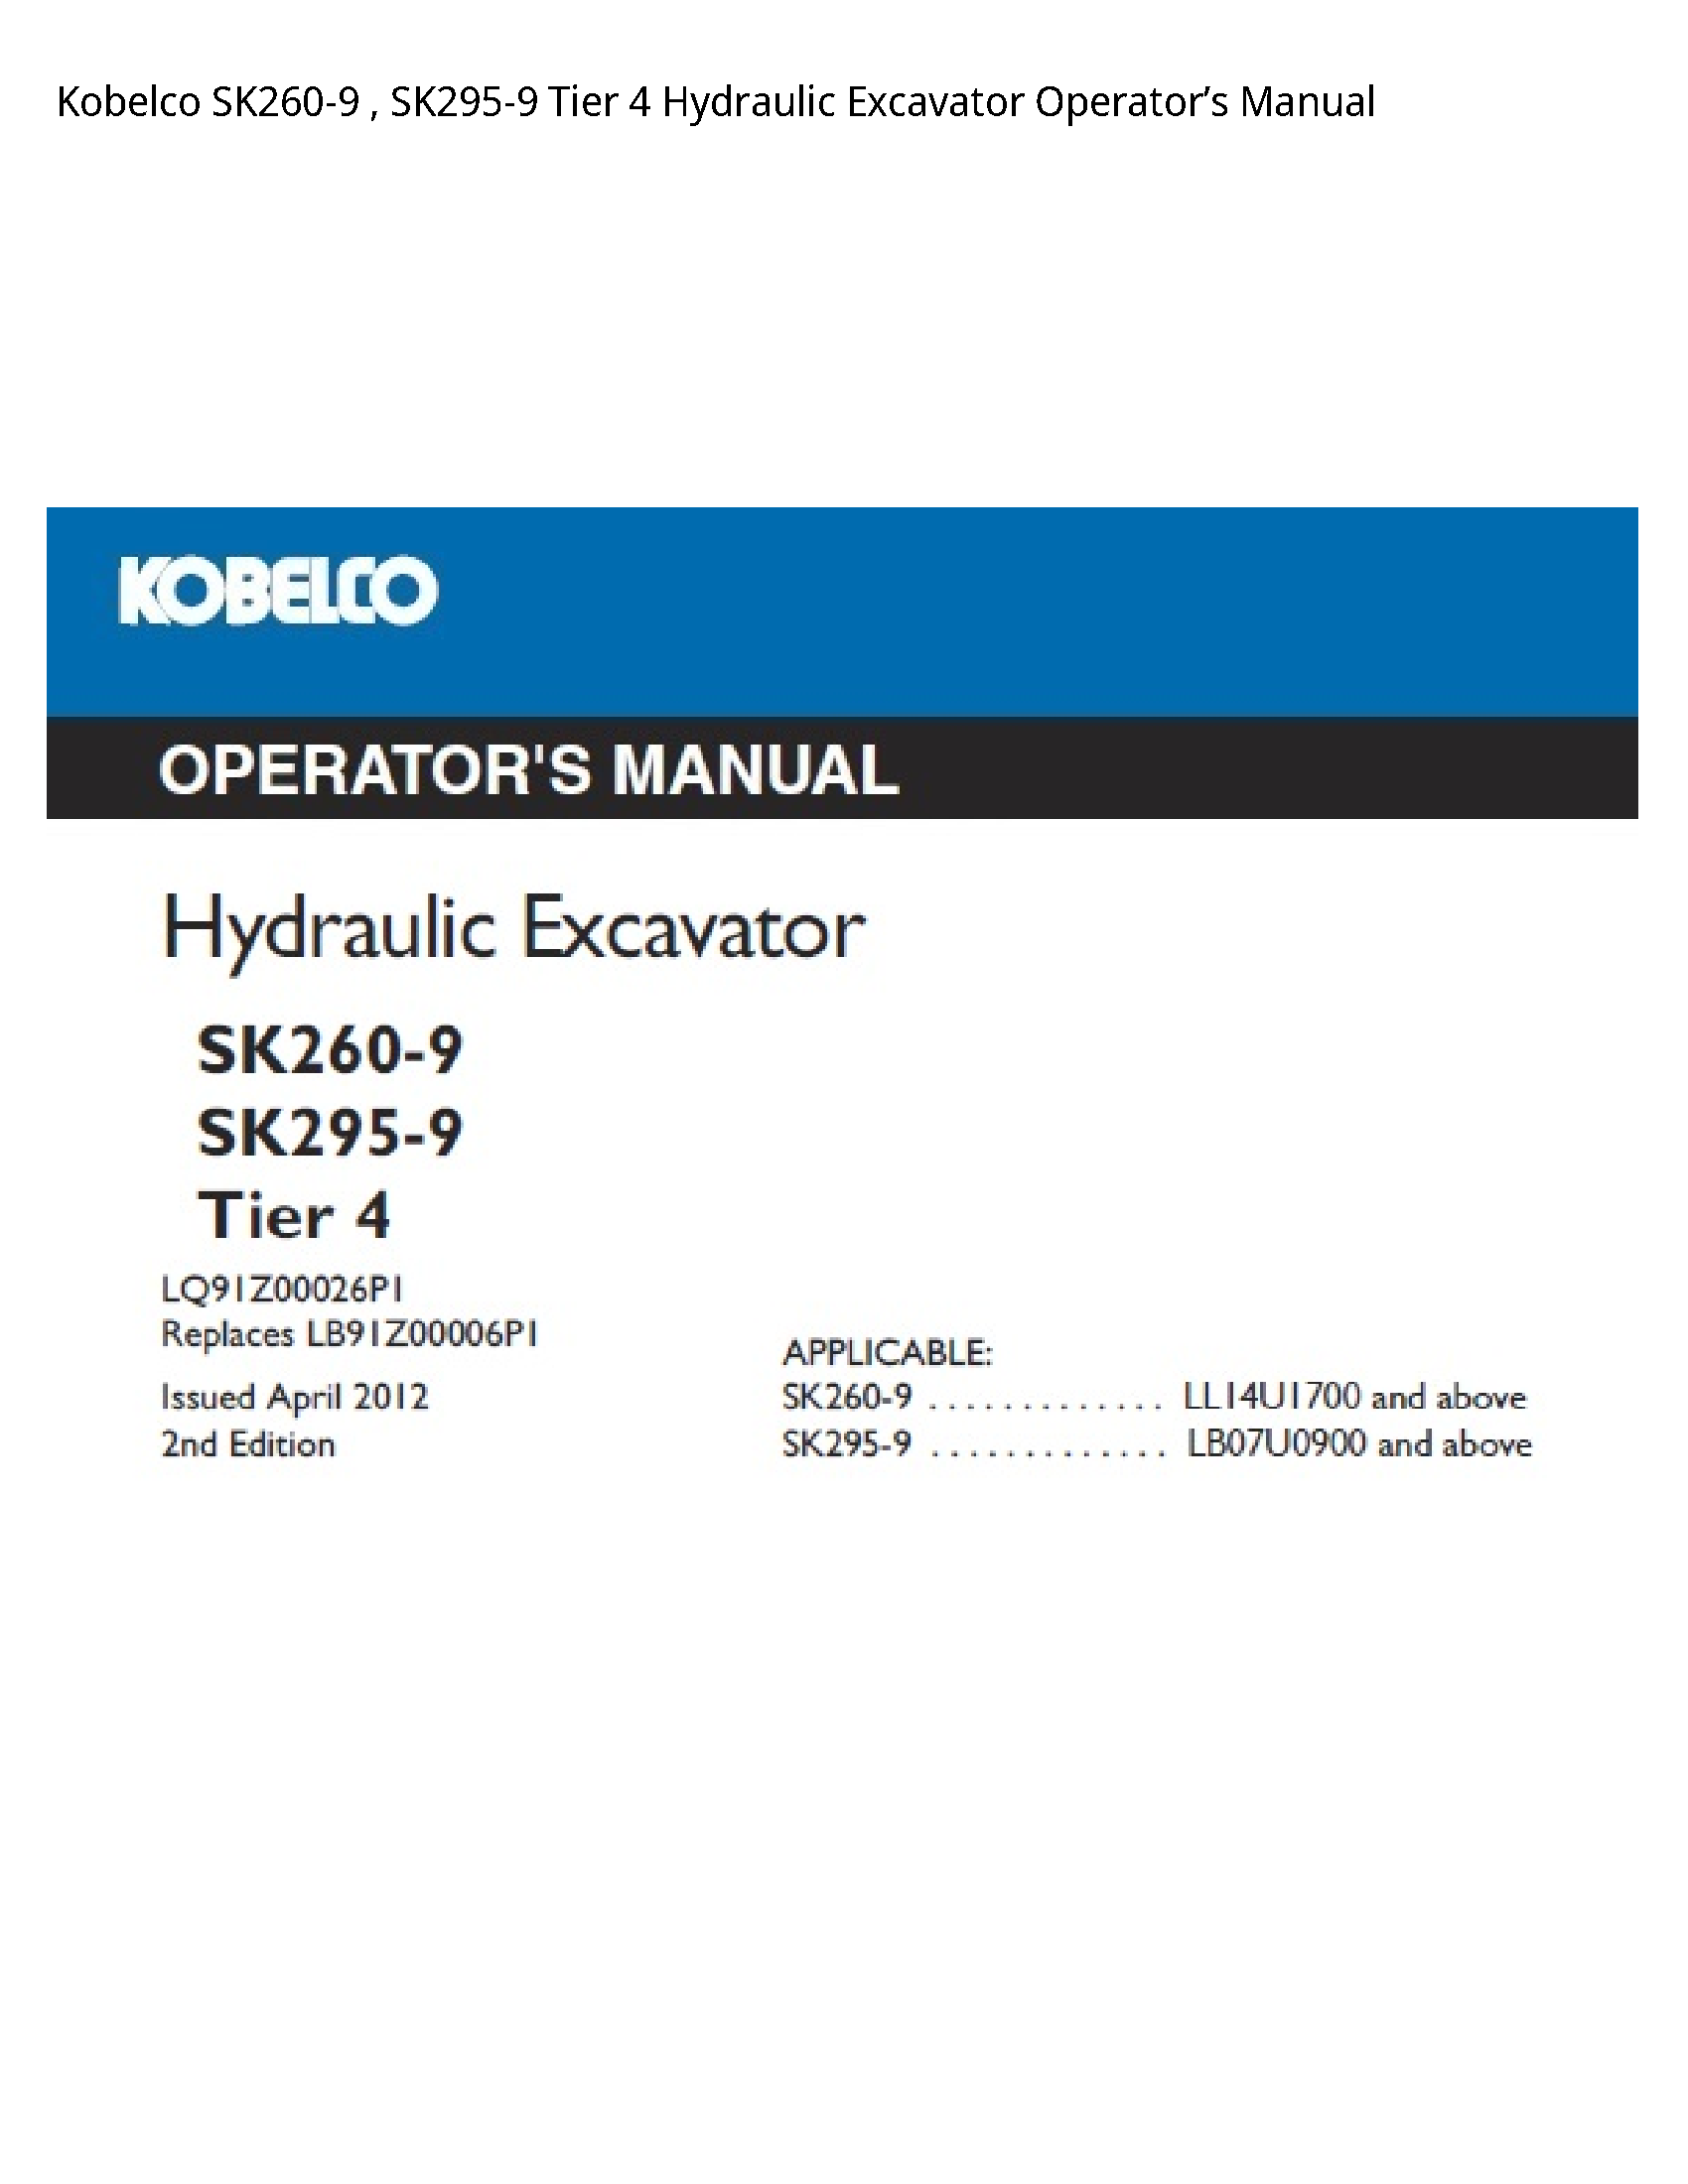 Kobelco SK260-9 Tier Hydraulic Excavator Operator’s manual